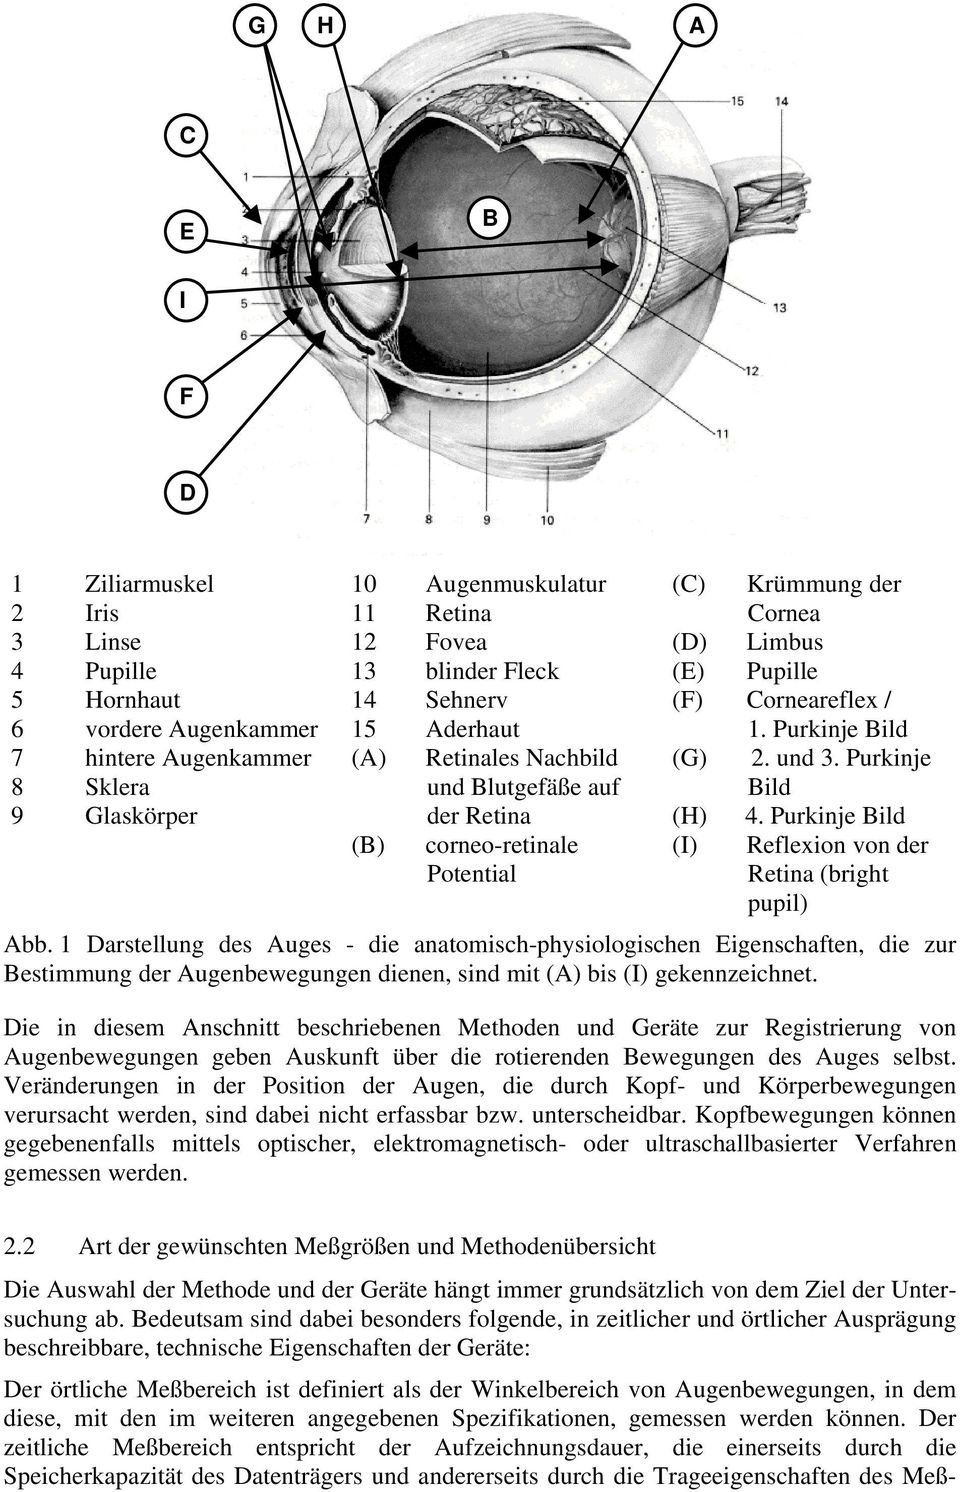 Purkinje Bild (H) 4. Purkinje Bild (I) Reflexion von der Retina (bright pupil) Abb.